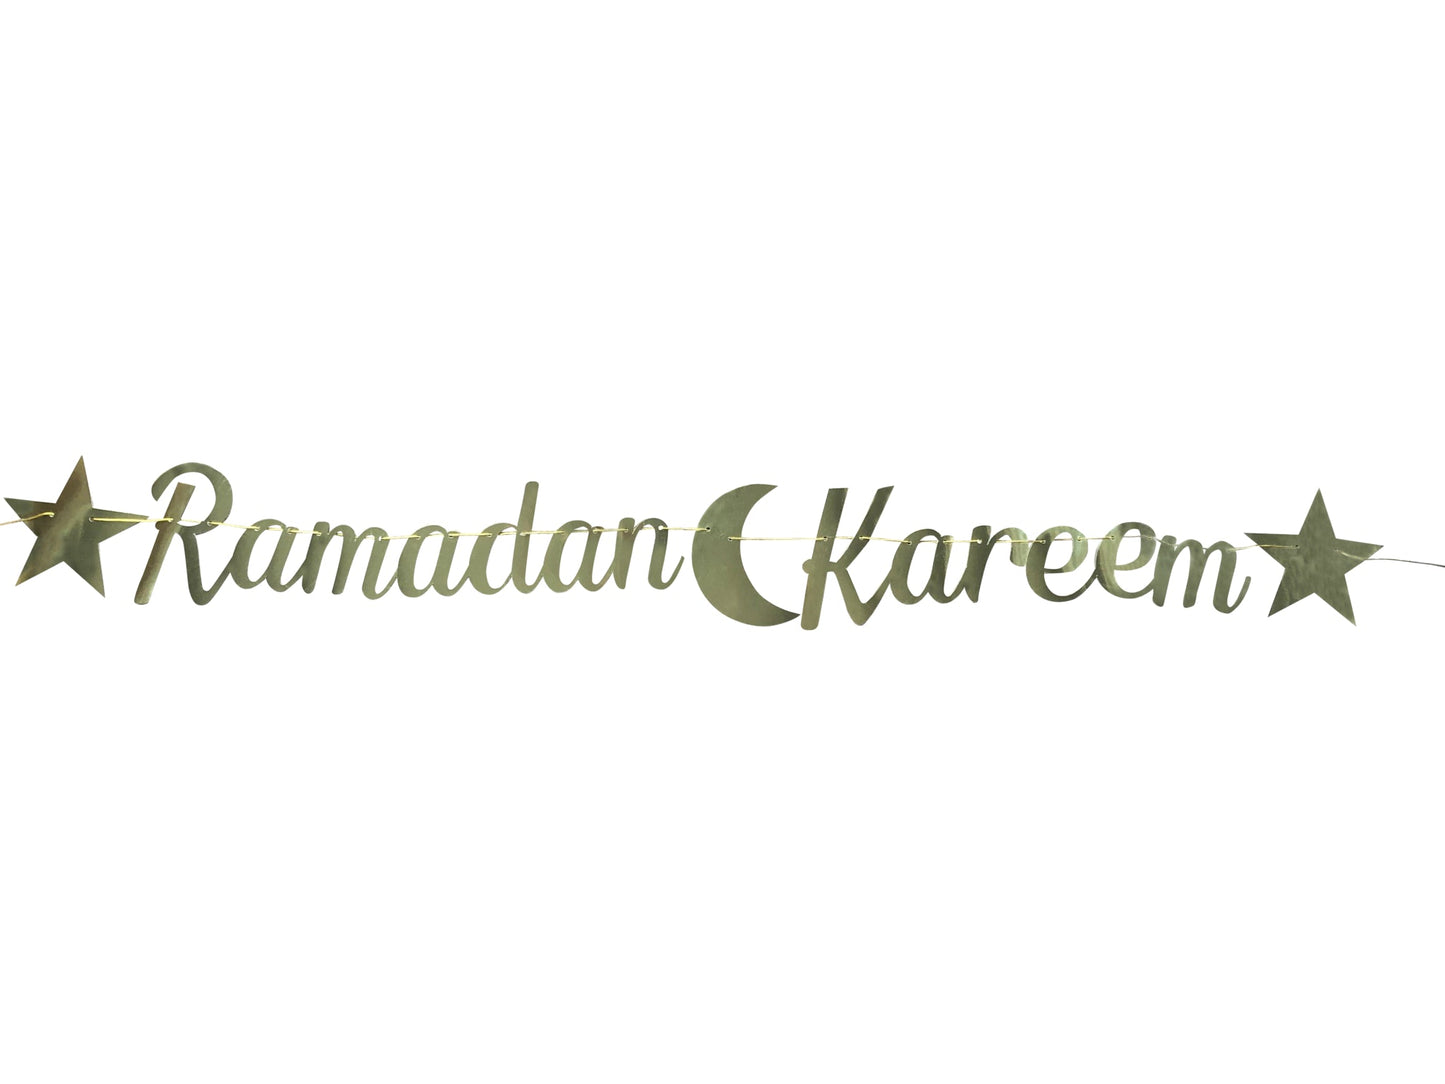 Gold Cursive Eid Mubarak and Ramadan Kareem Banner - UAE